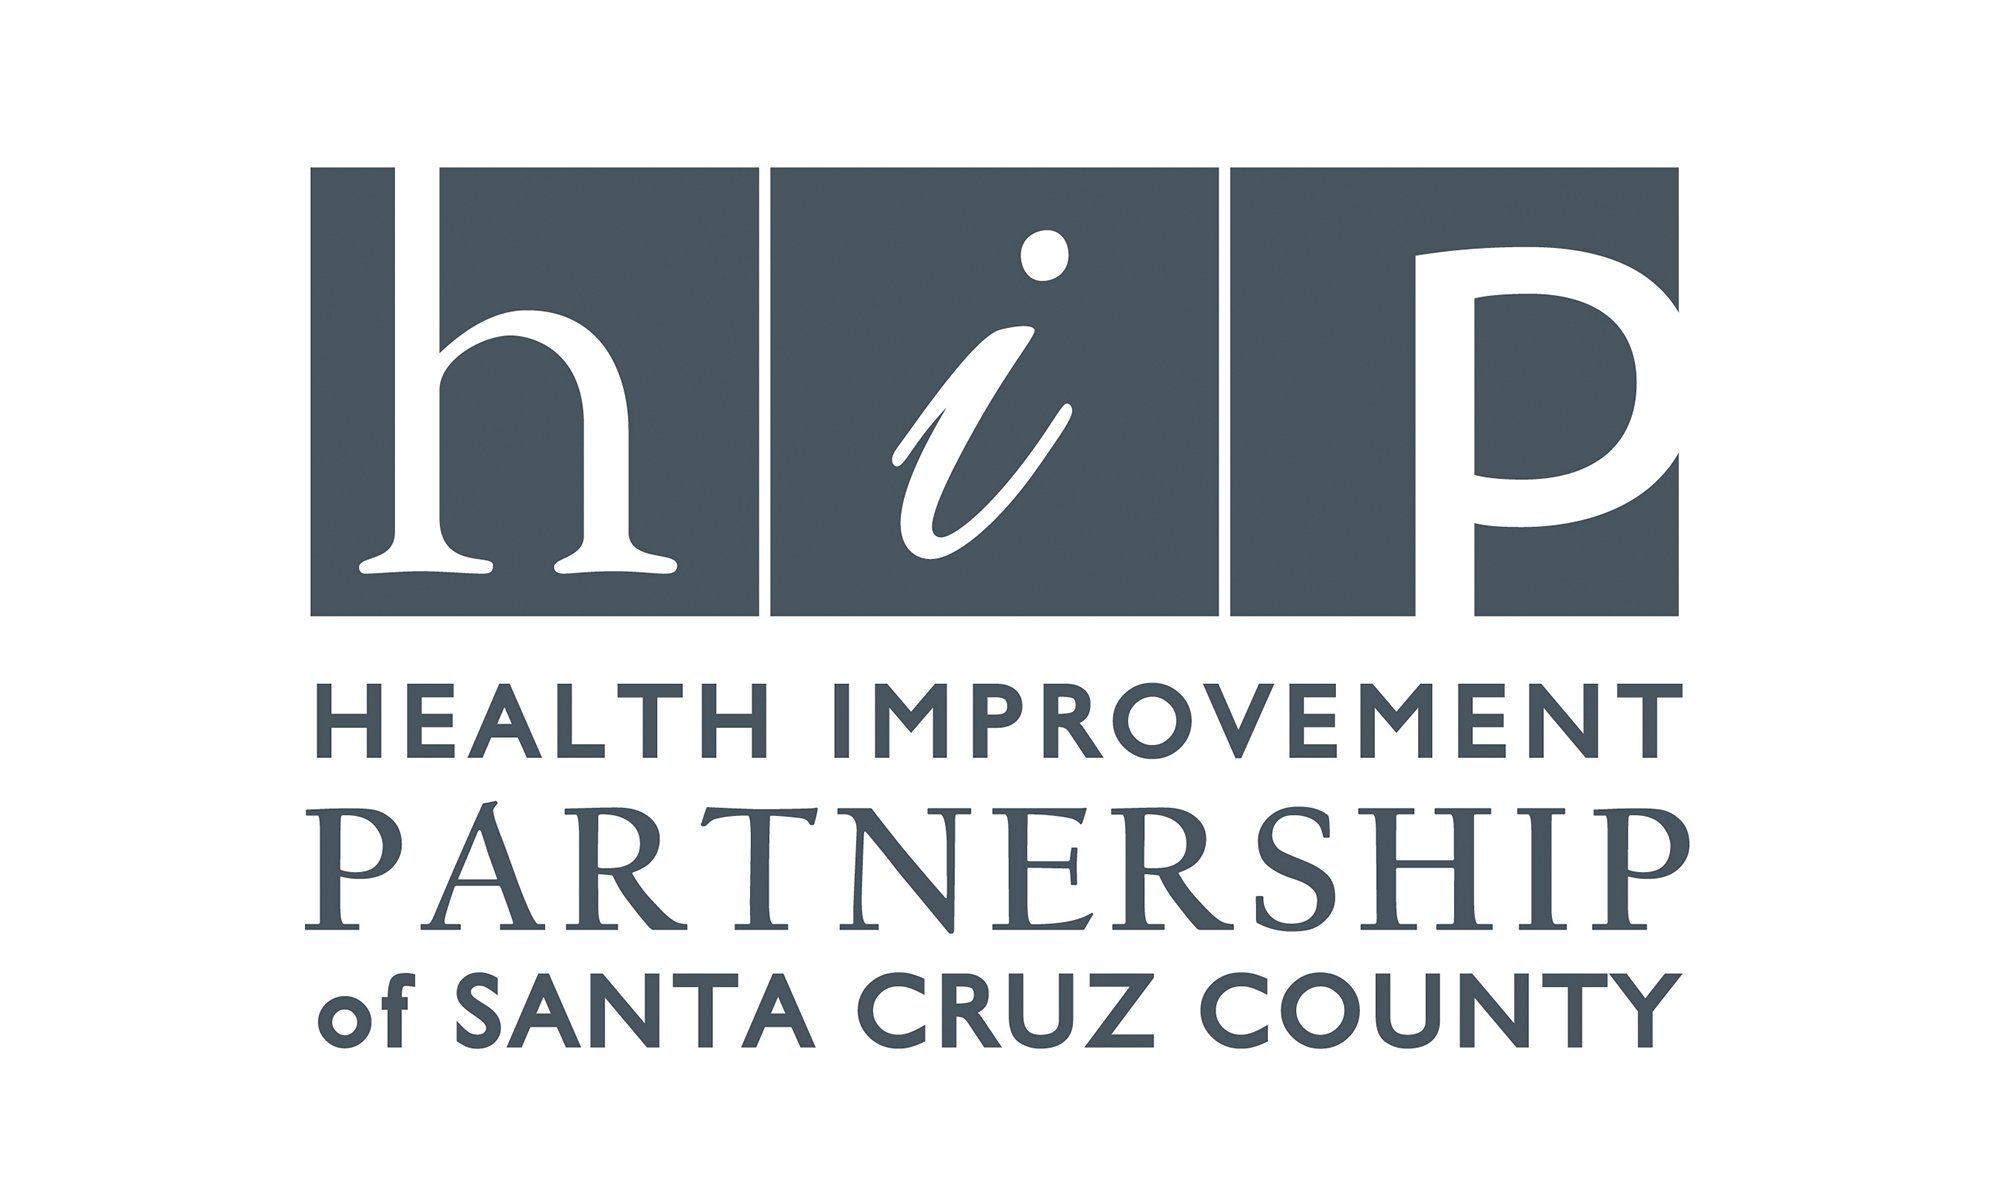 HIP: Health Improvement Partnership of Santa Cruz County